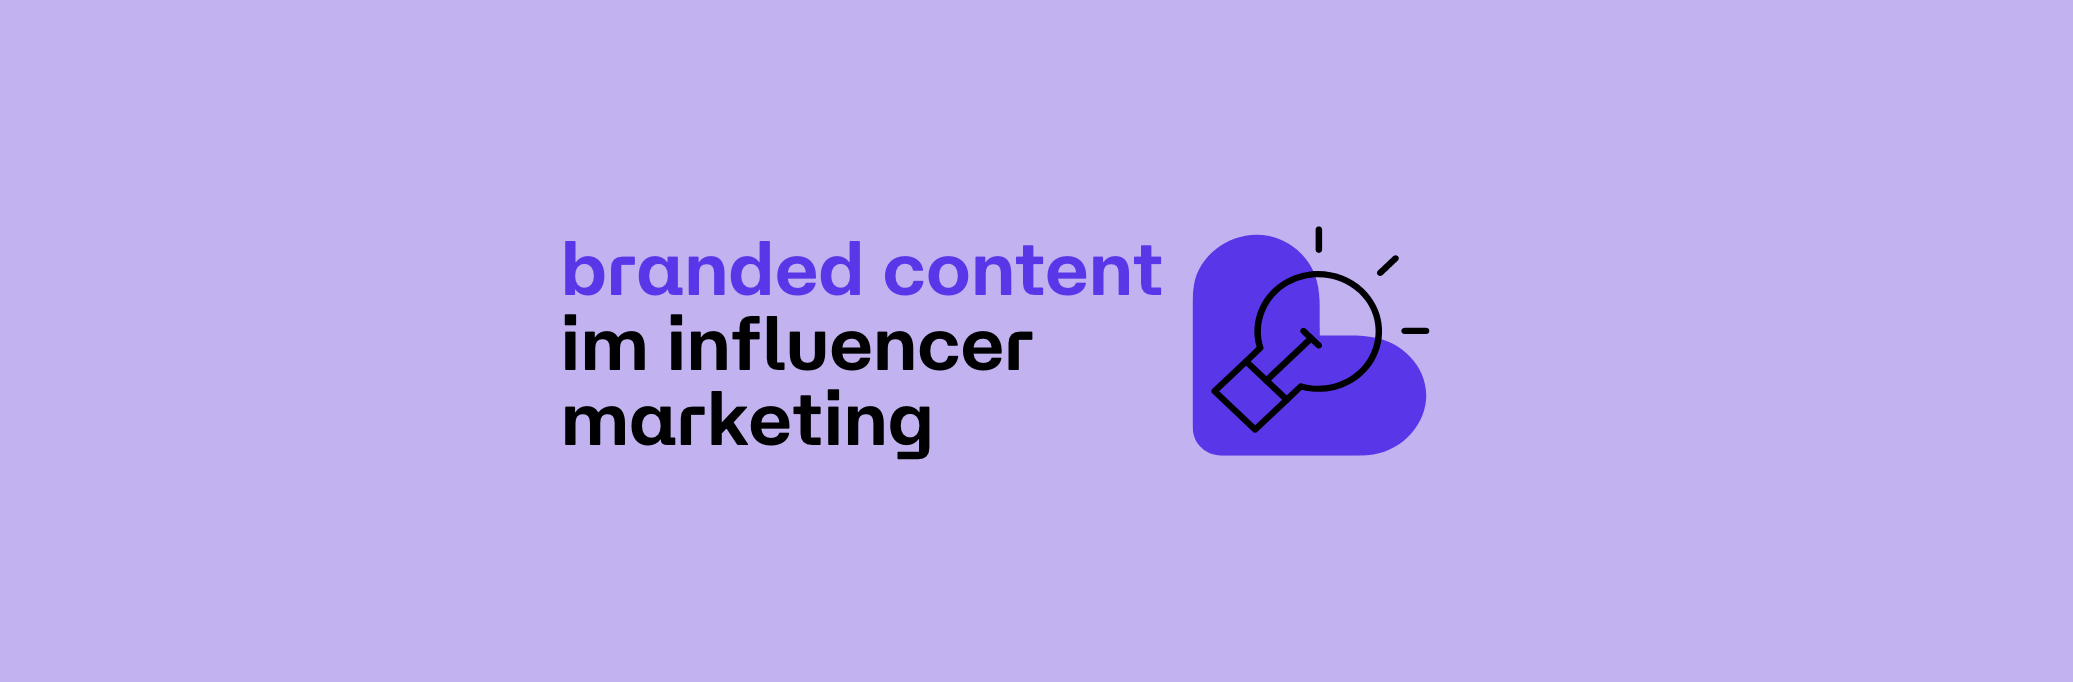 branded content im influencer marketing